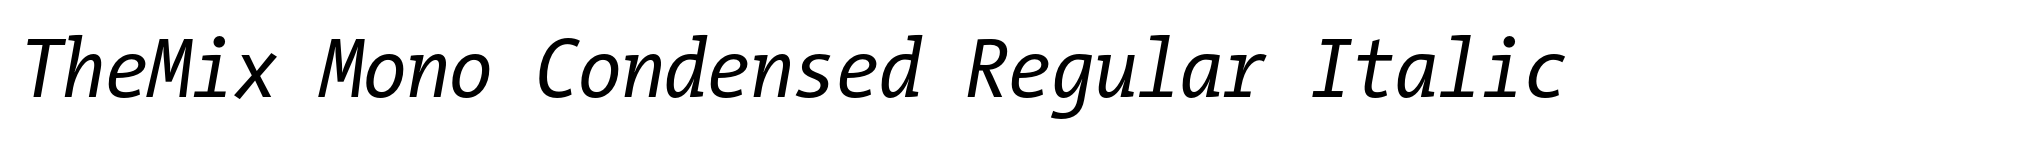 TheMix Mono Condensed Regular Italic image